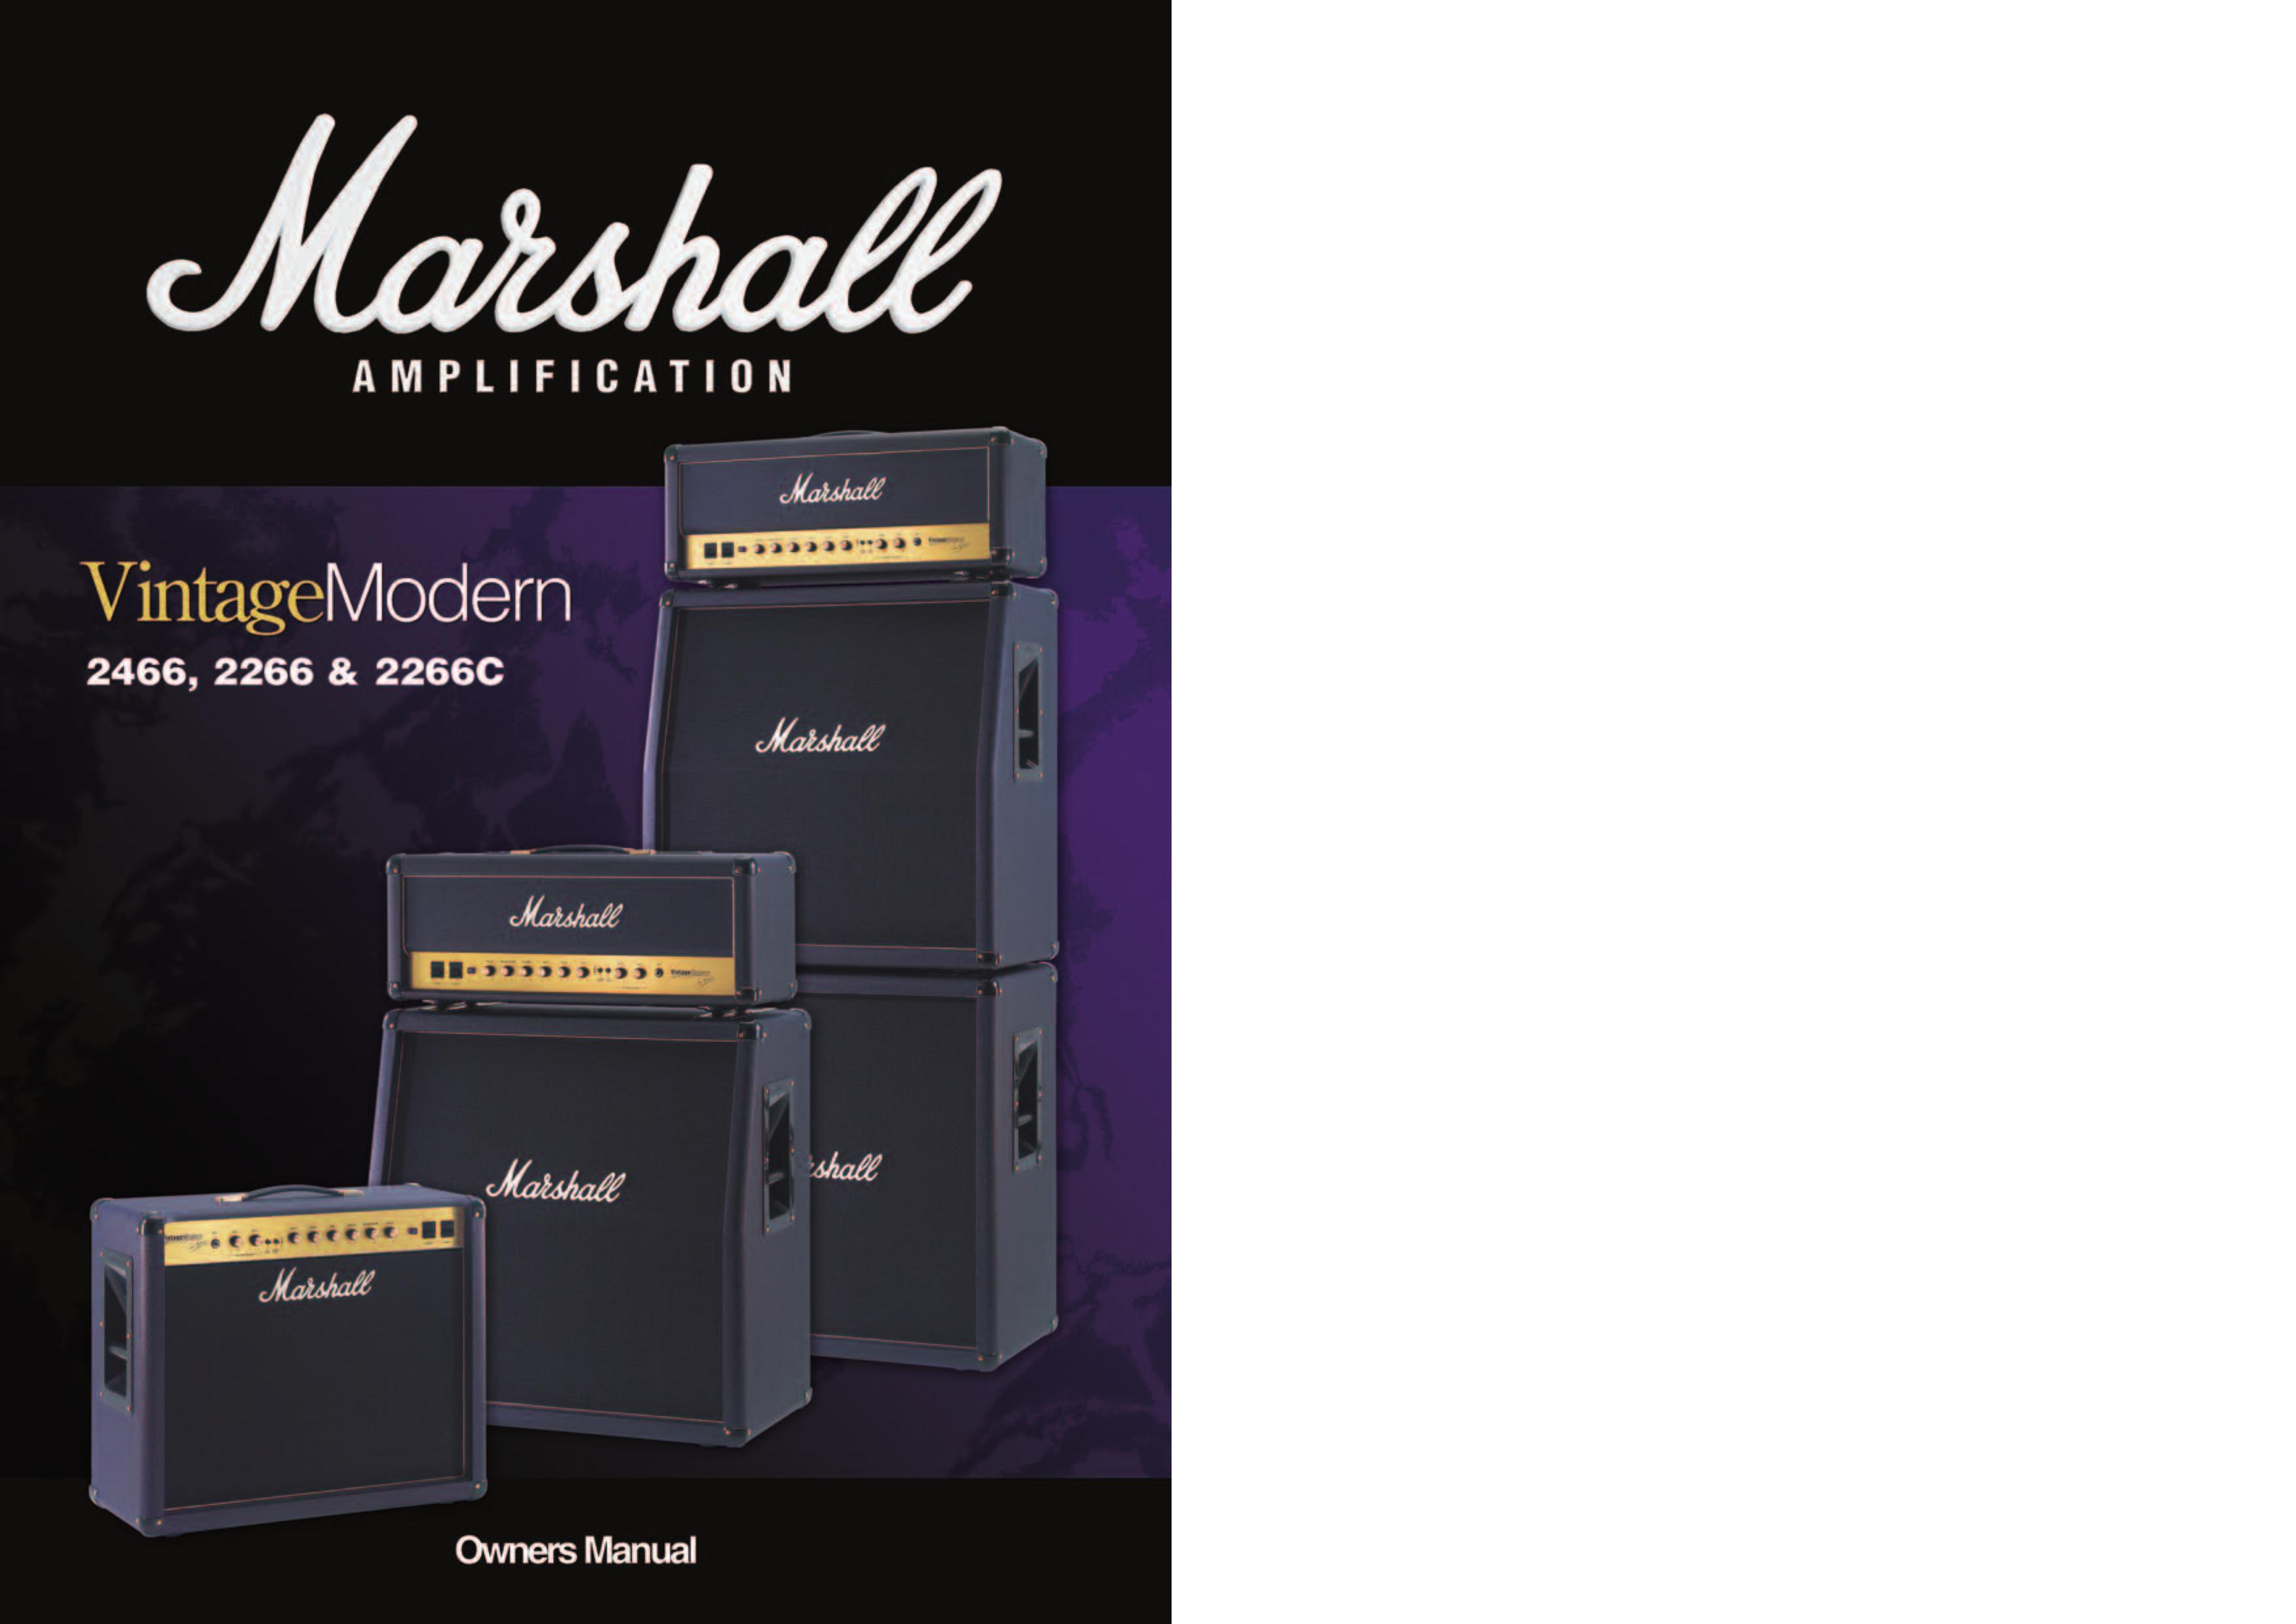 Marshall Amplification 2266C Musical Instrument Amplifier User Manual